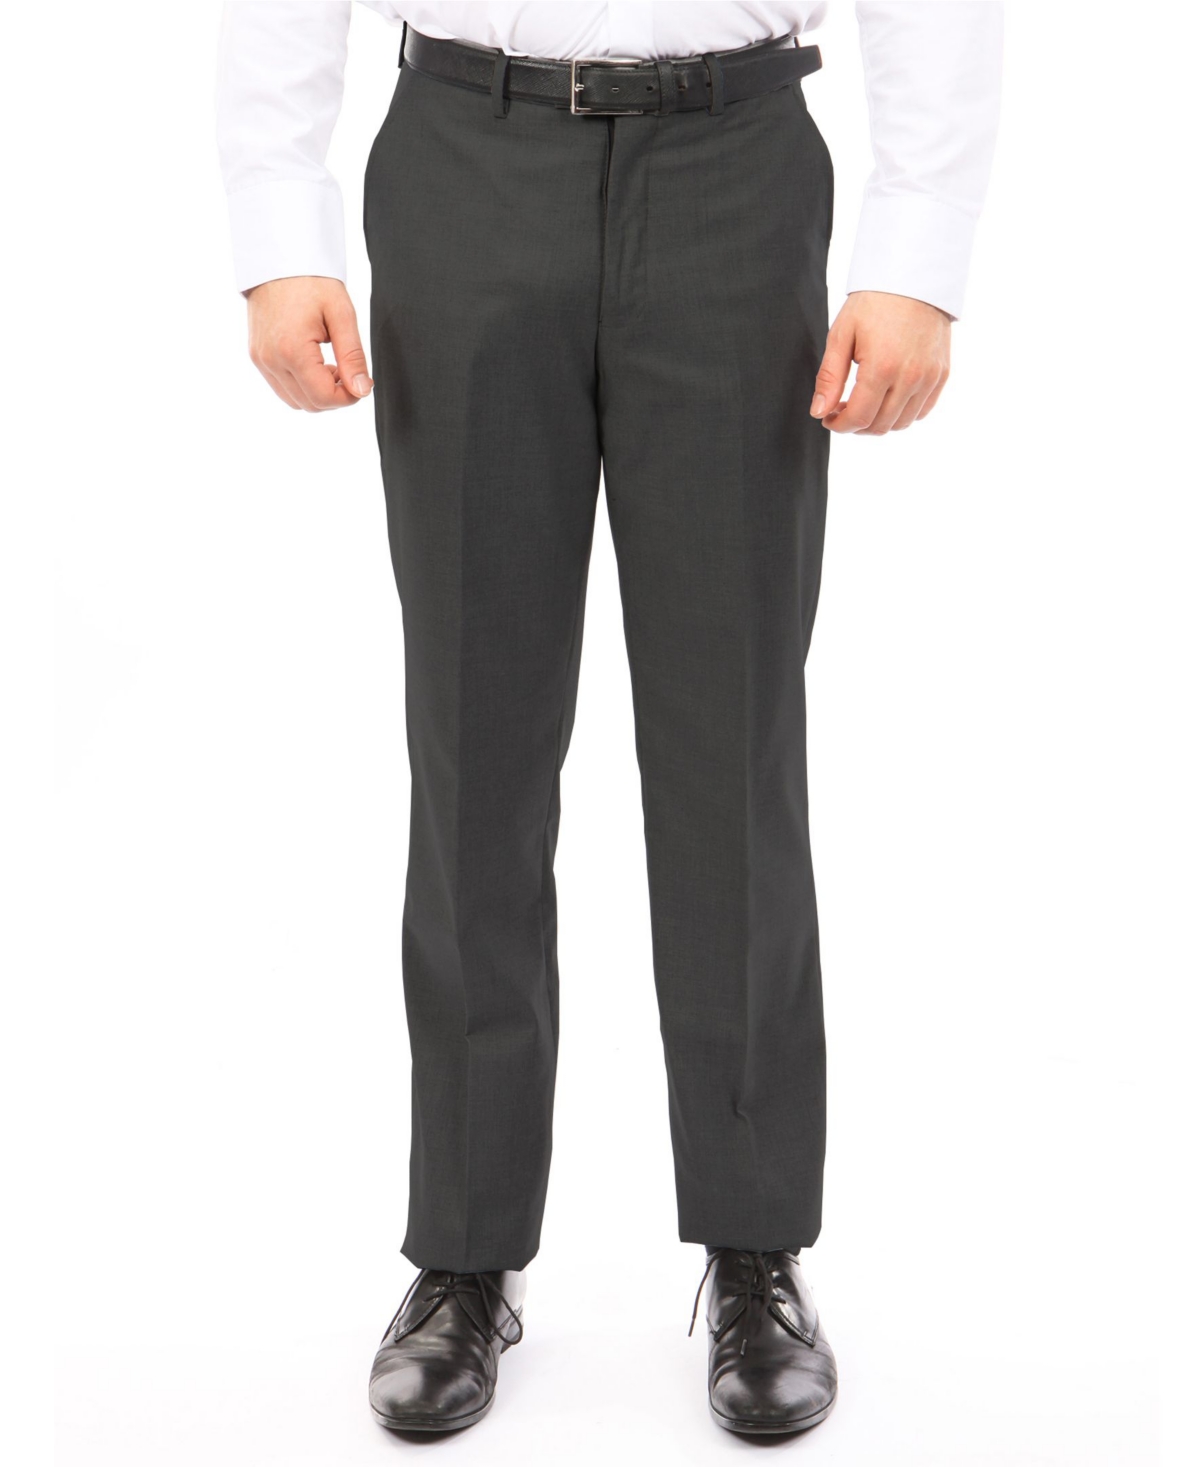 Men's Slim-Fit Flat Front Stretch Dress Pants - Tan